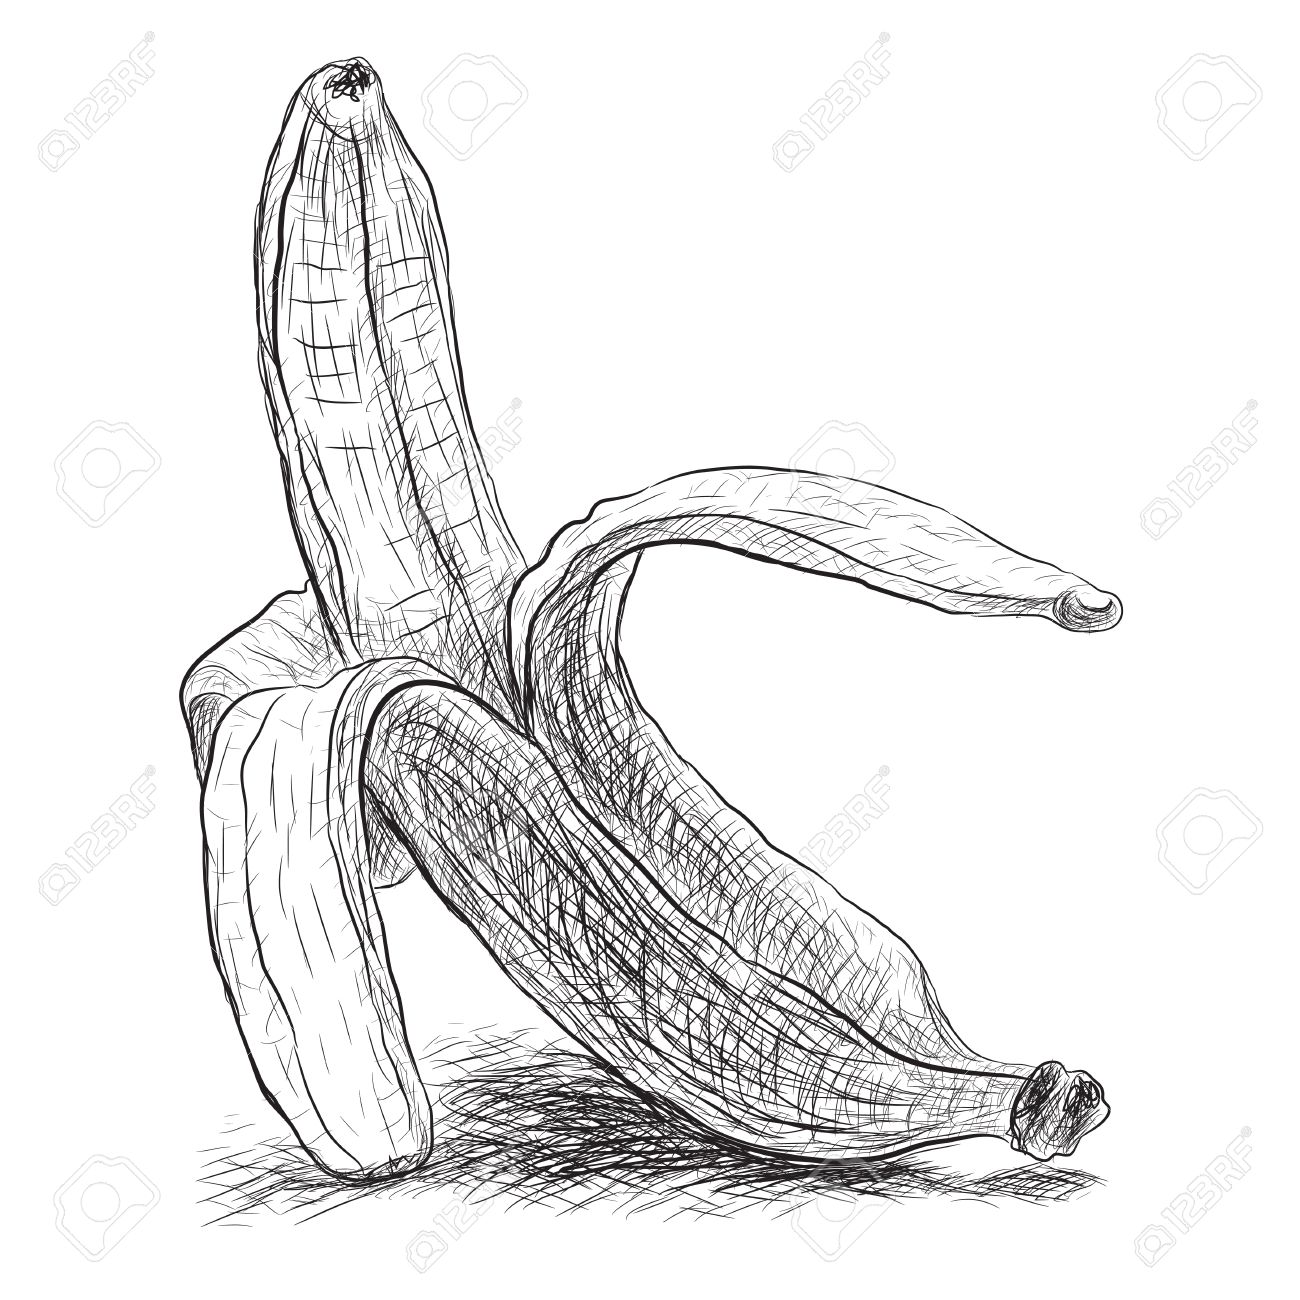 banana moon sketch